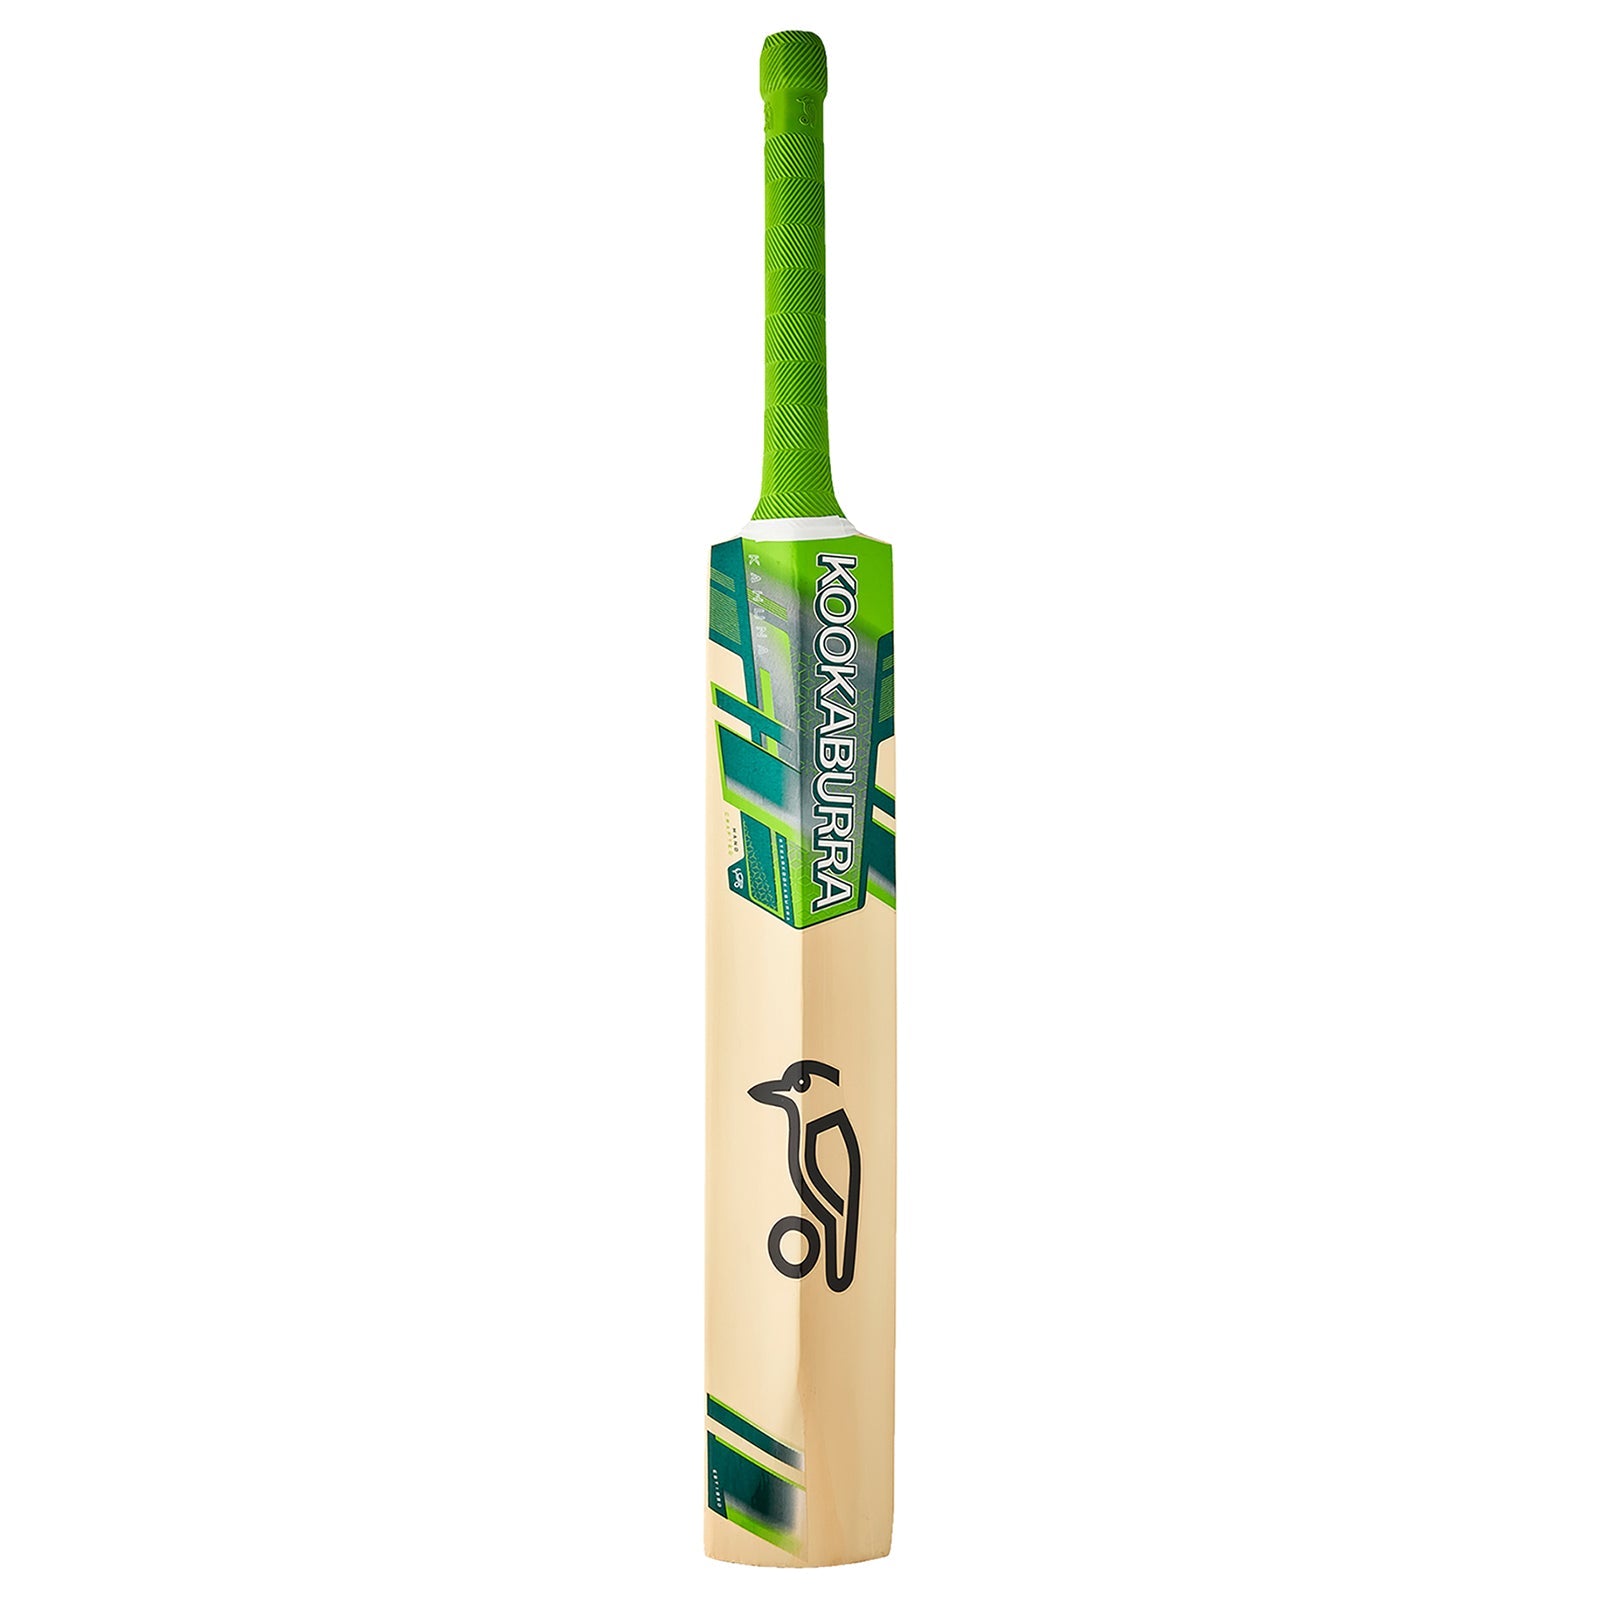 Kookaburra Kahuna Pro 9.0 Kashmir Willow Cricket Bat - Size 6